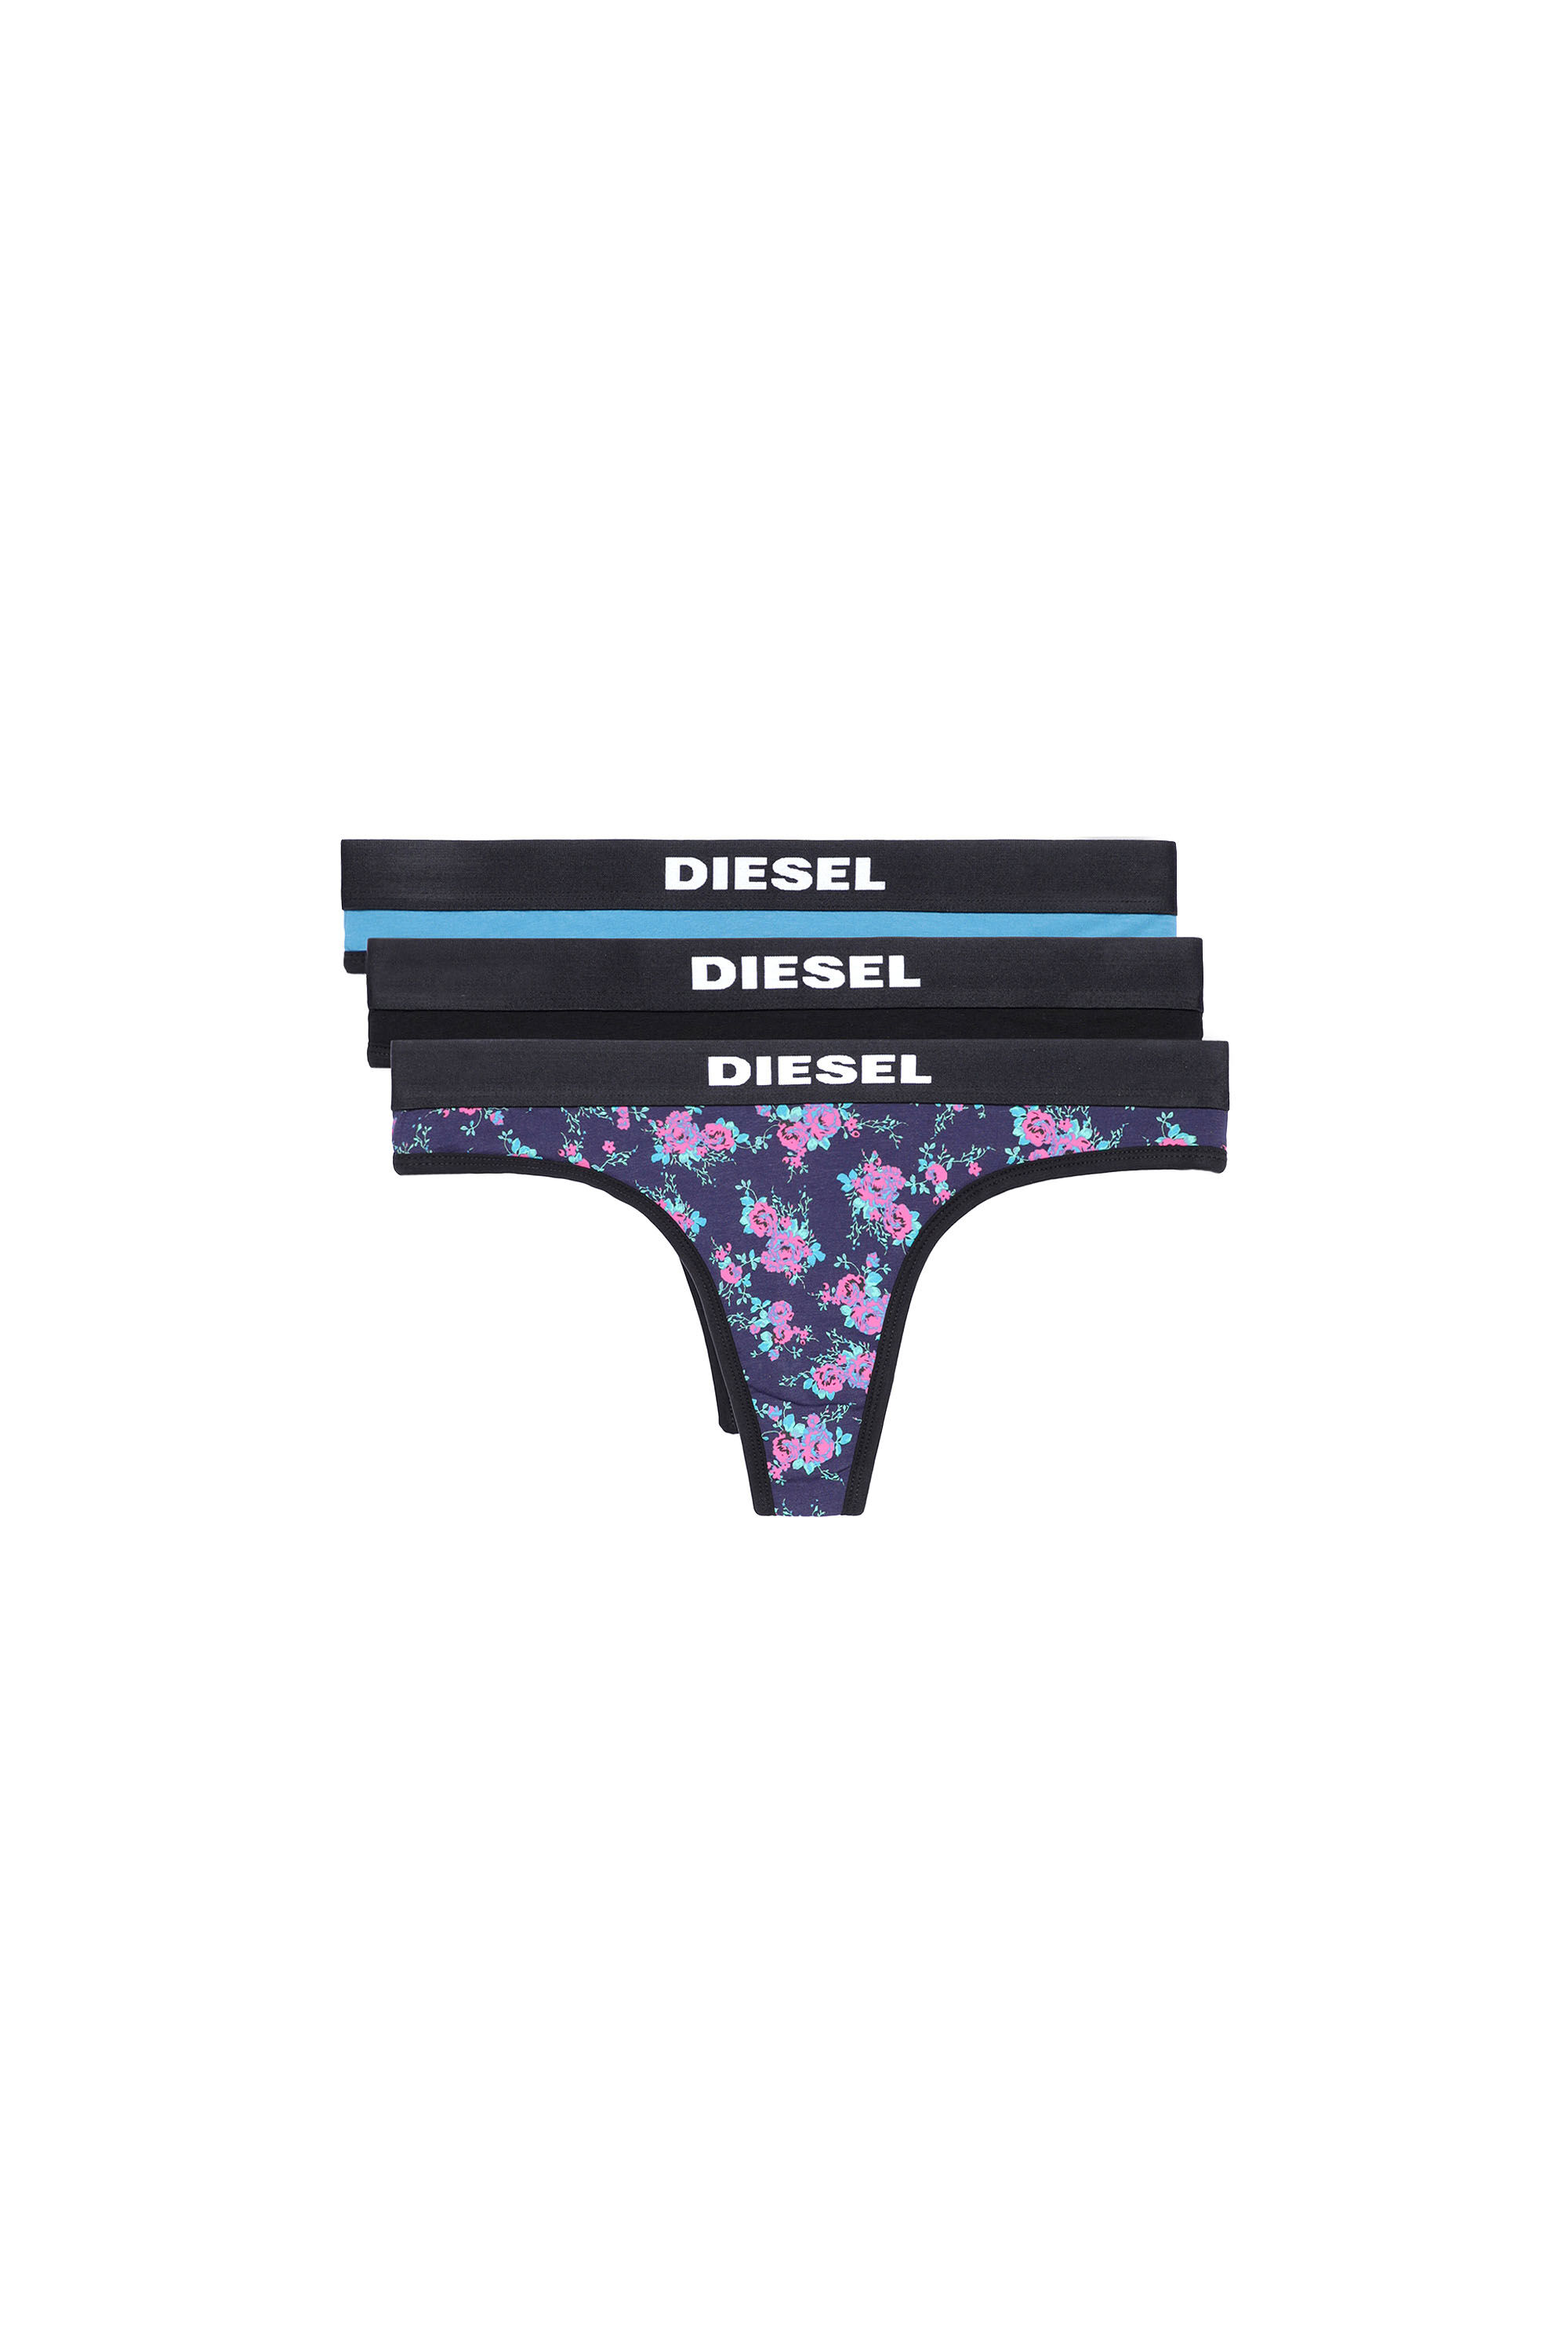 Diesel - UFST-STARS-THREEPACK, Black/Blue - Image 2